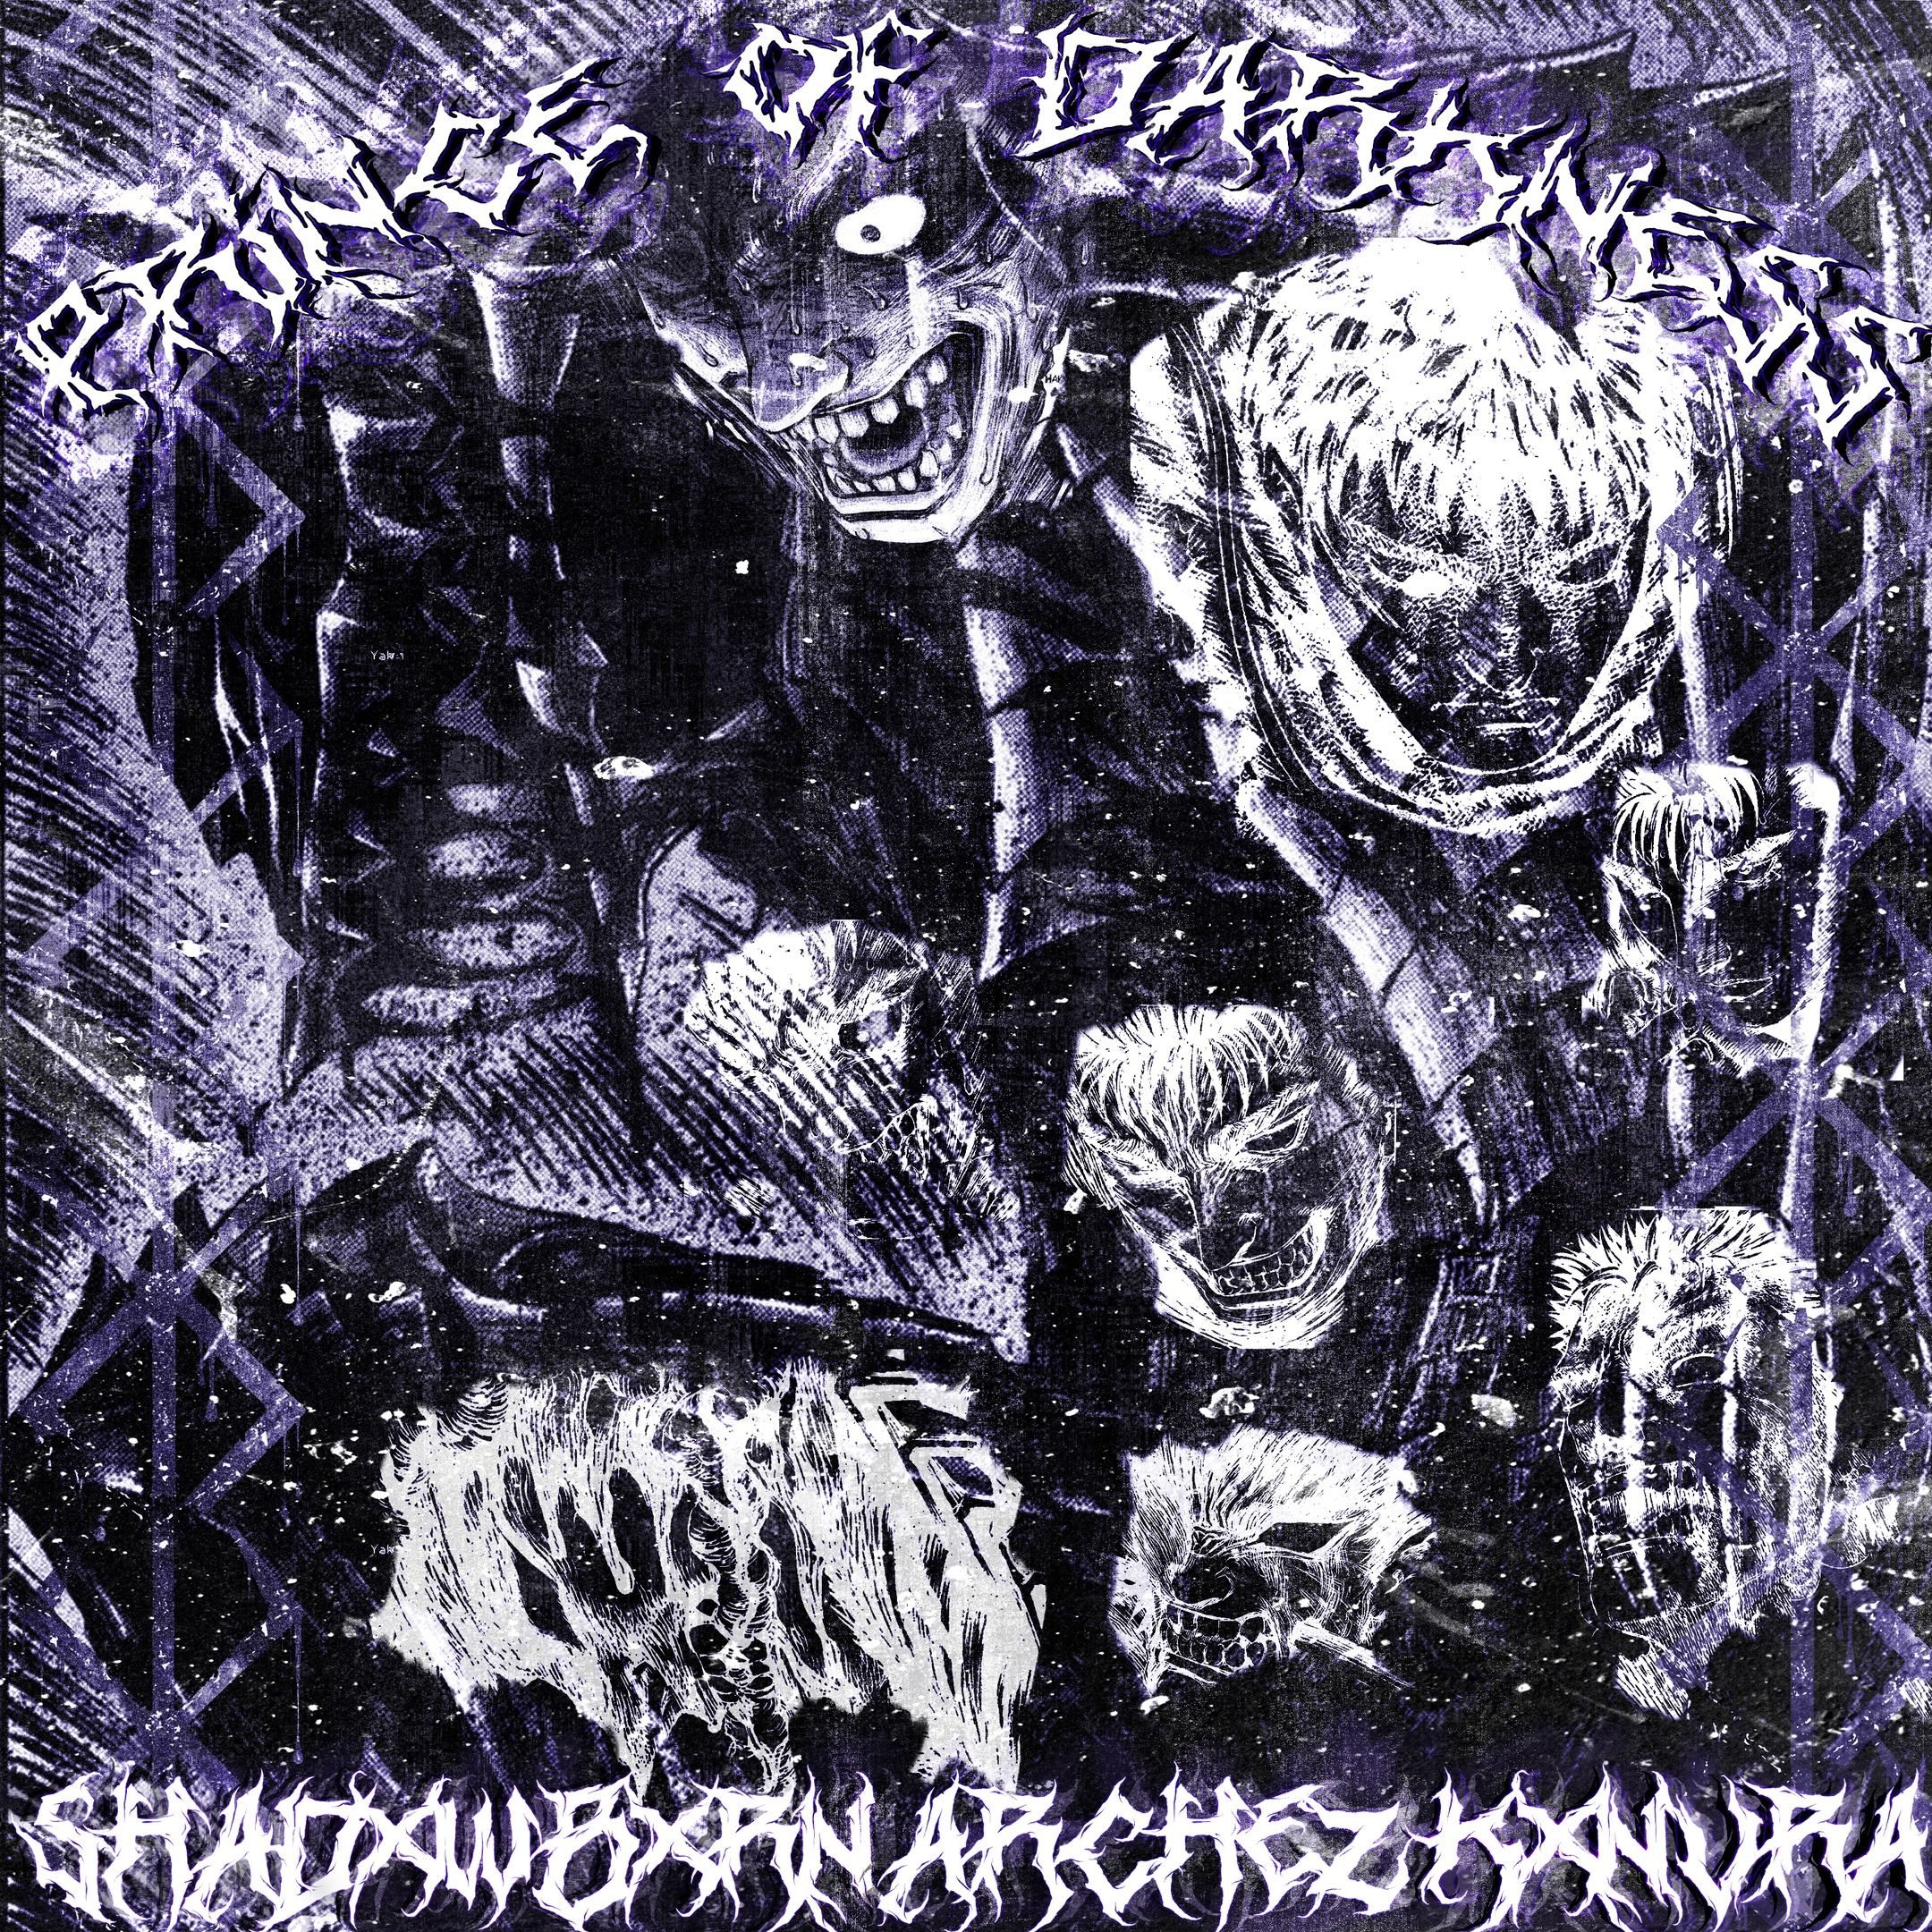 Download SHADXWBXRN, ARCHEZ, KXNVRA - PRINCE OF DARKNESS